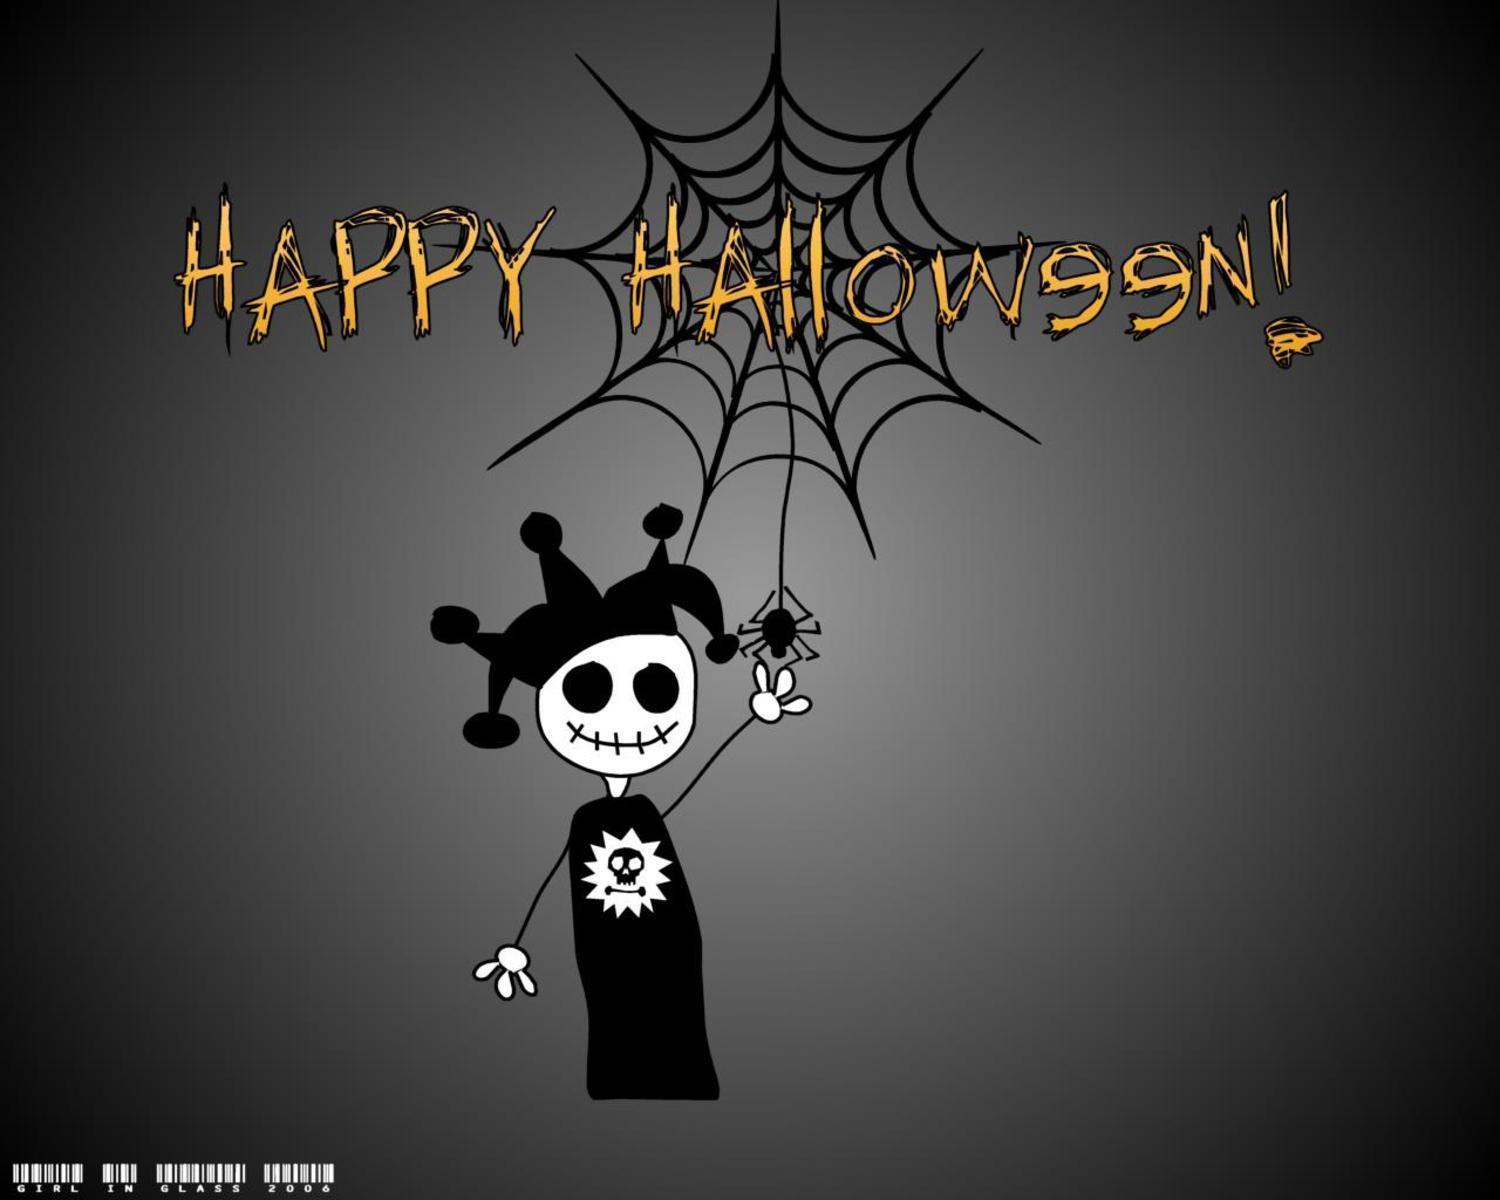 Halloween graphic free desktop background wallpaper image